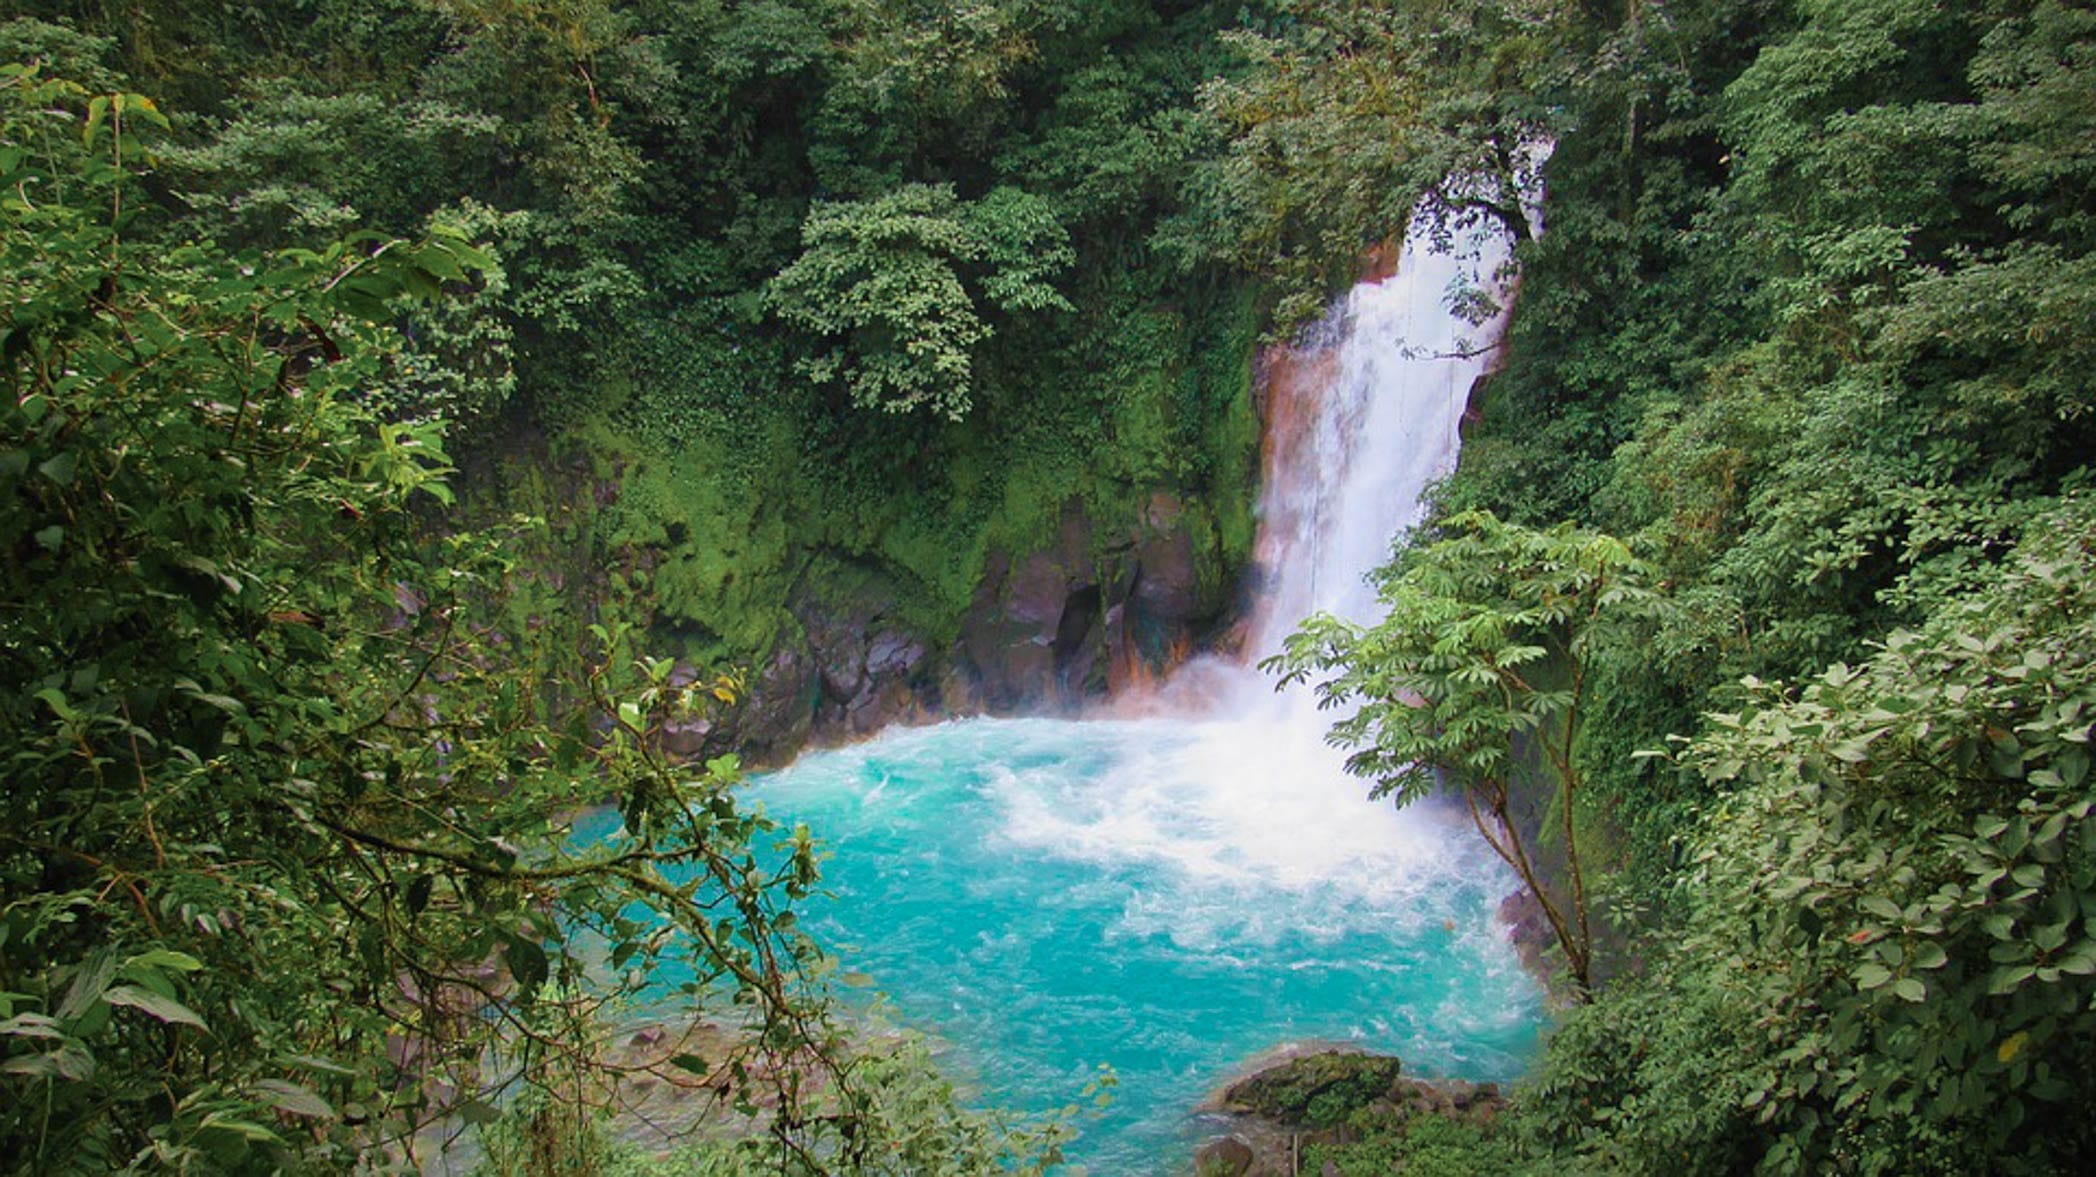 5-Day Costa Rica Itinerary